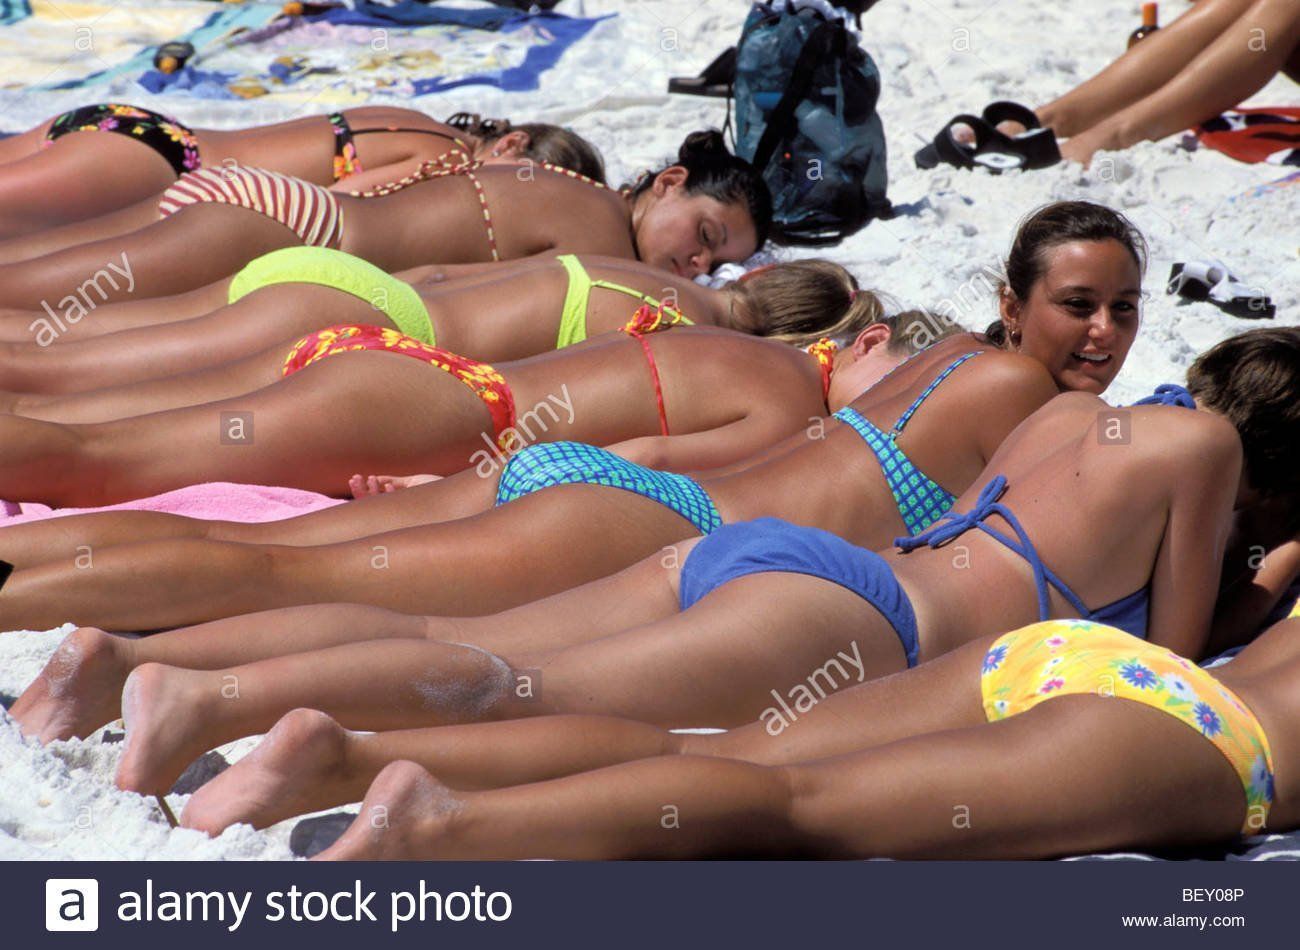 panama city beach amateur bikini photos Xxx Pics Hd